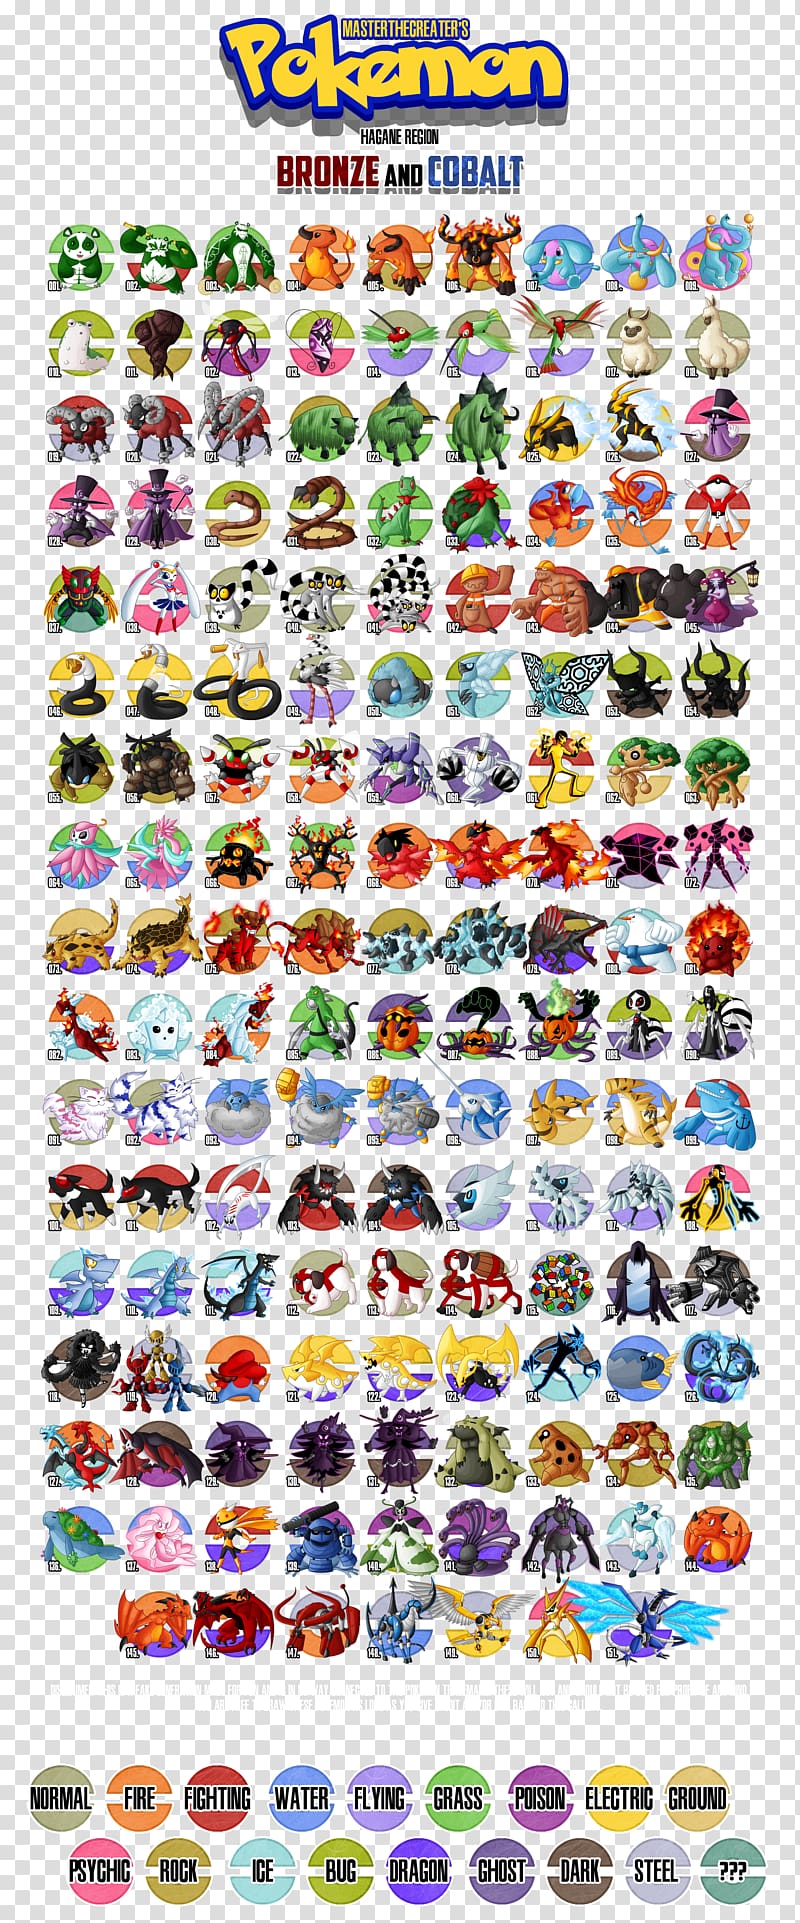 Pokémon X And Y Pokémon Sun And Moon Pokémon Ruby And Sapphire Pokédex  Pokémon Diamond And